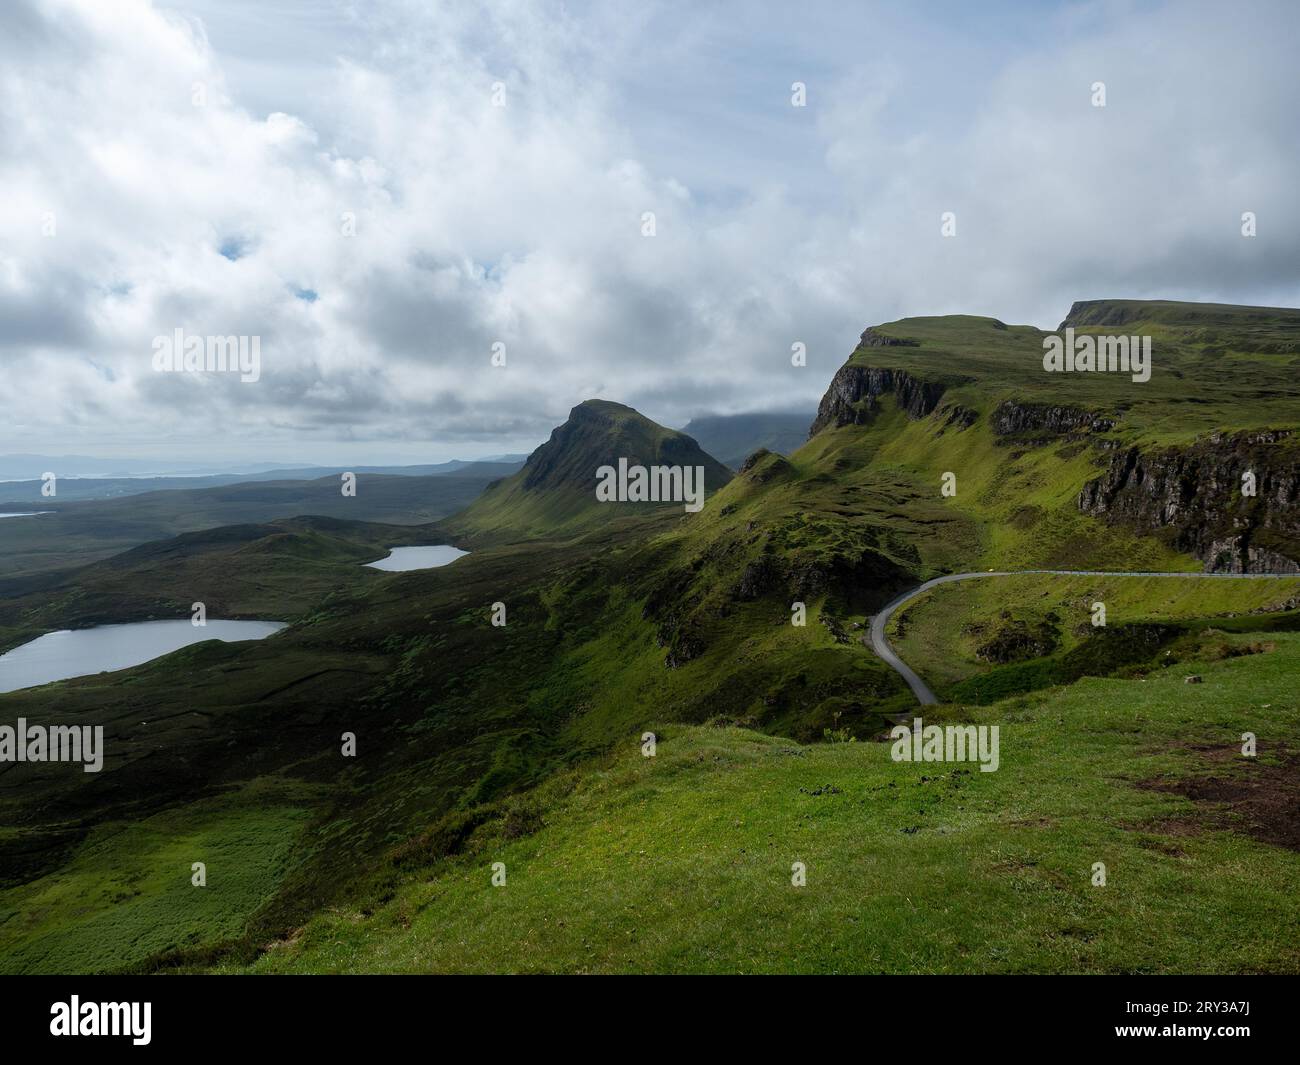 The Quiraing, Isle of Skye, Scotland, Landslide where Paleogene lava has slipped down on faults in the weaker Jurassic sediments beneath. Stock Photo